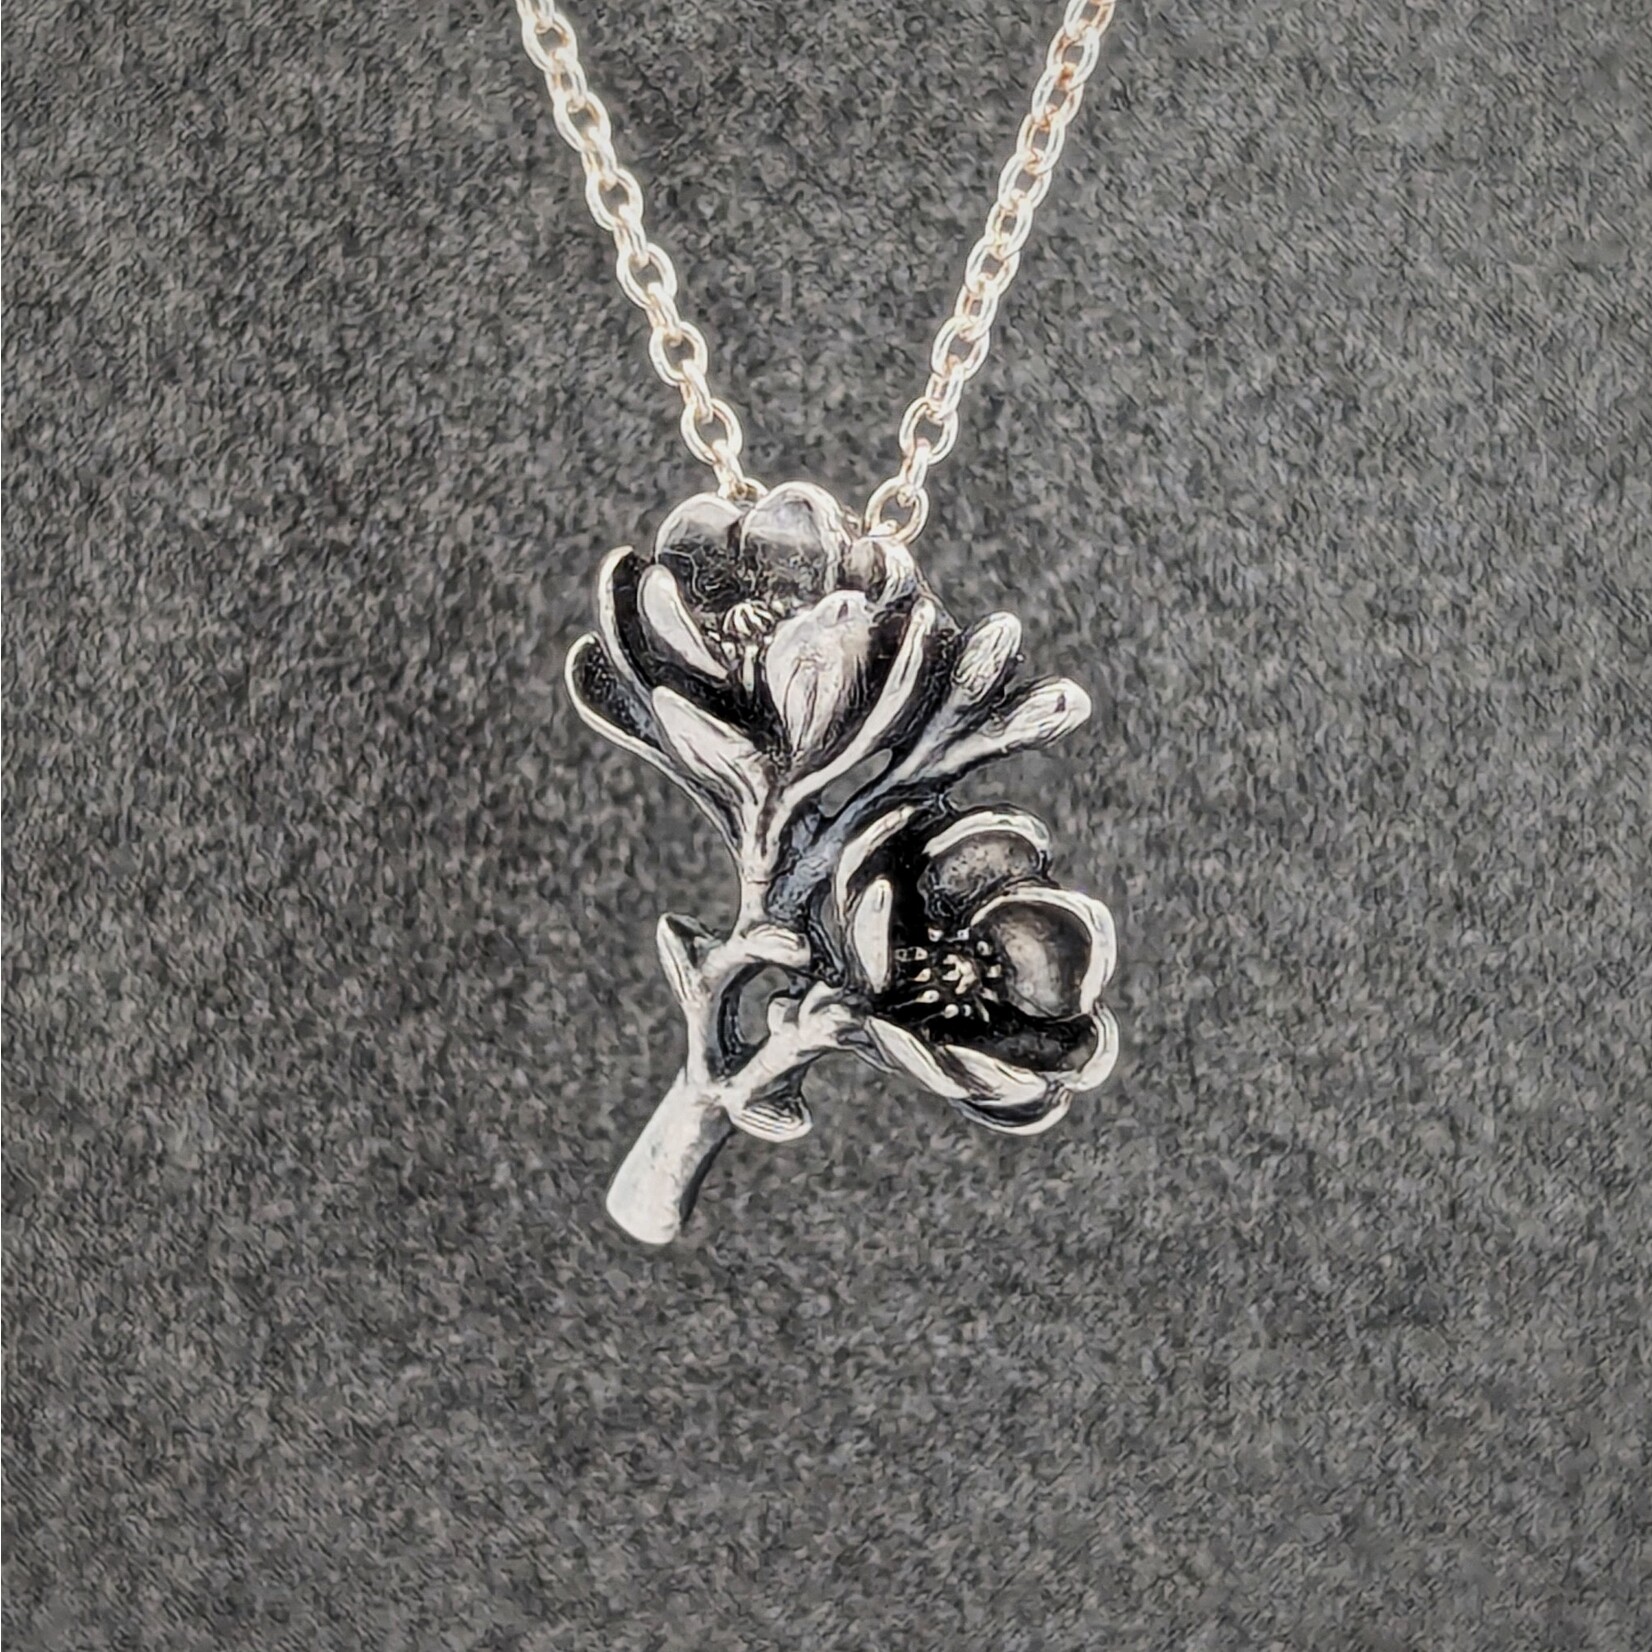 Carrie Nunes Jewelry Magnolia Blooms Pendant